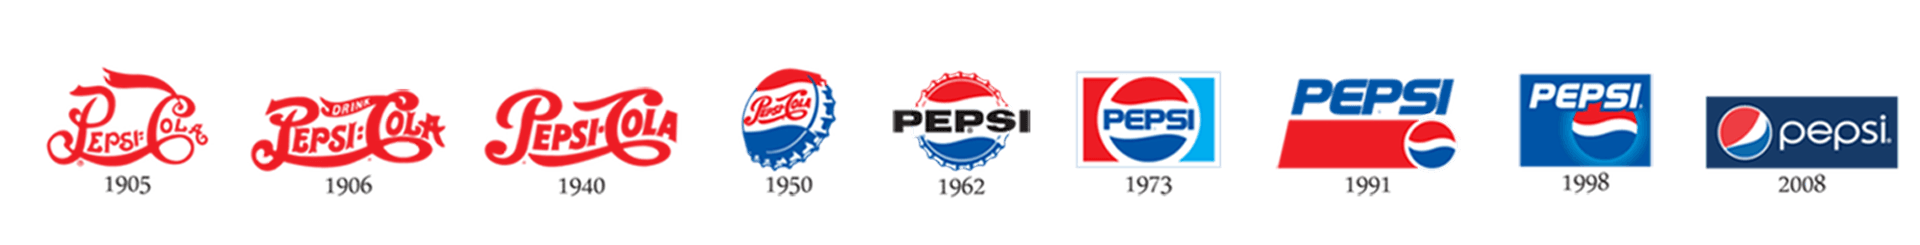 Pepsi 2017 Logo - Admiral